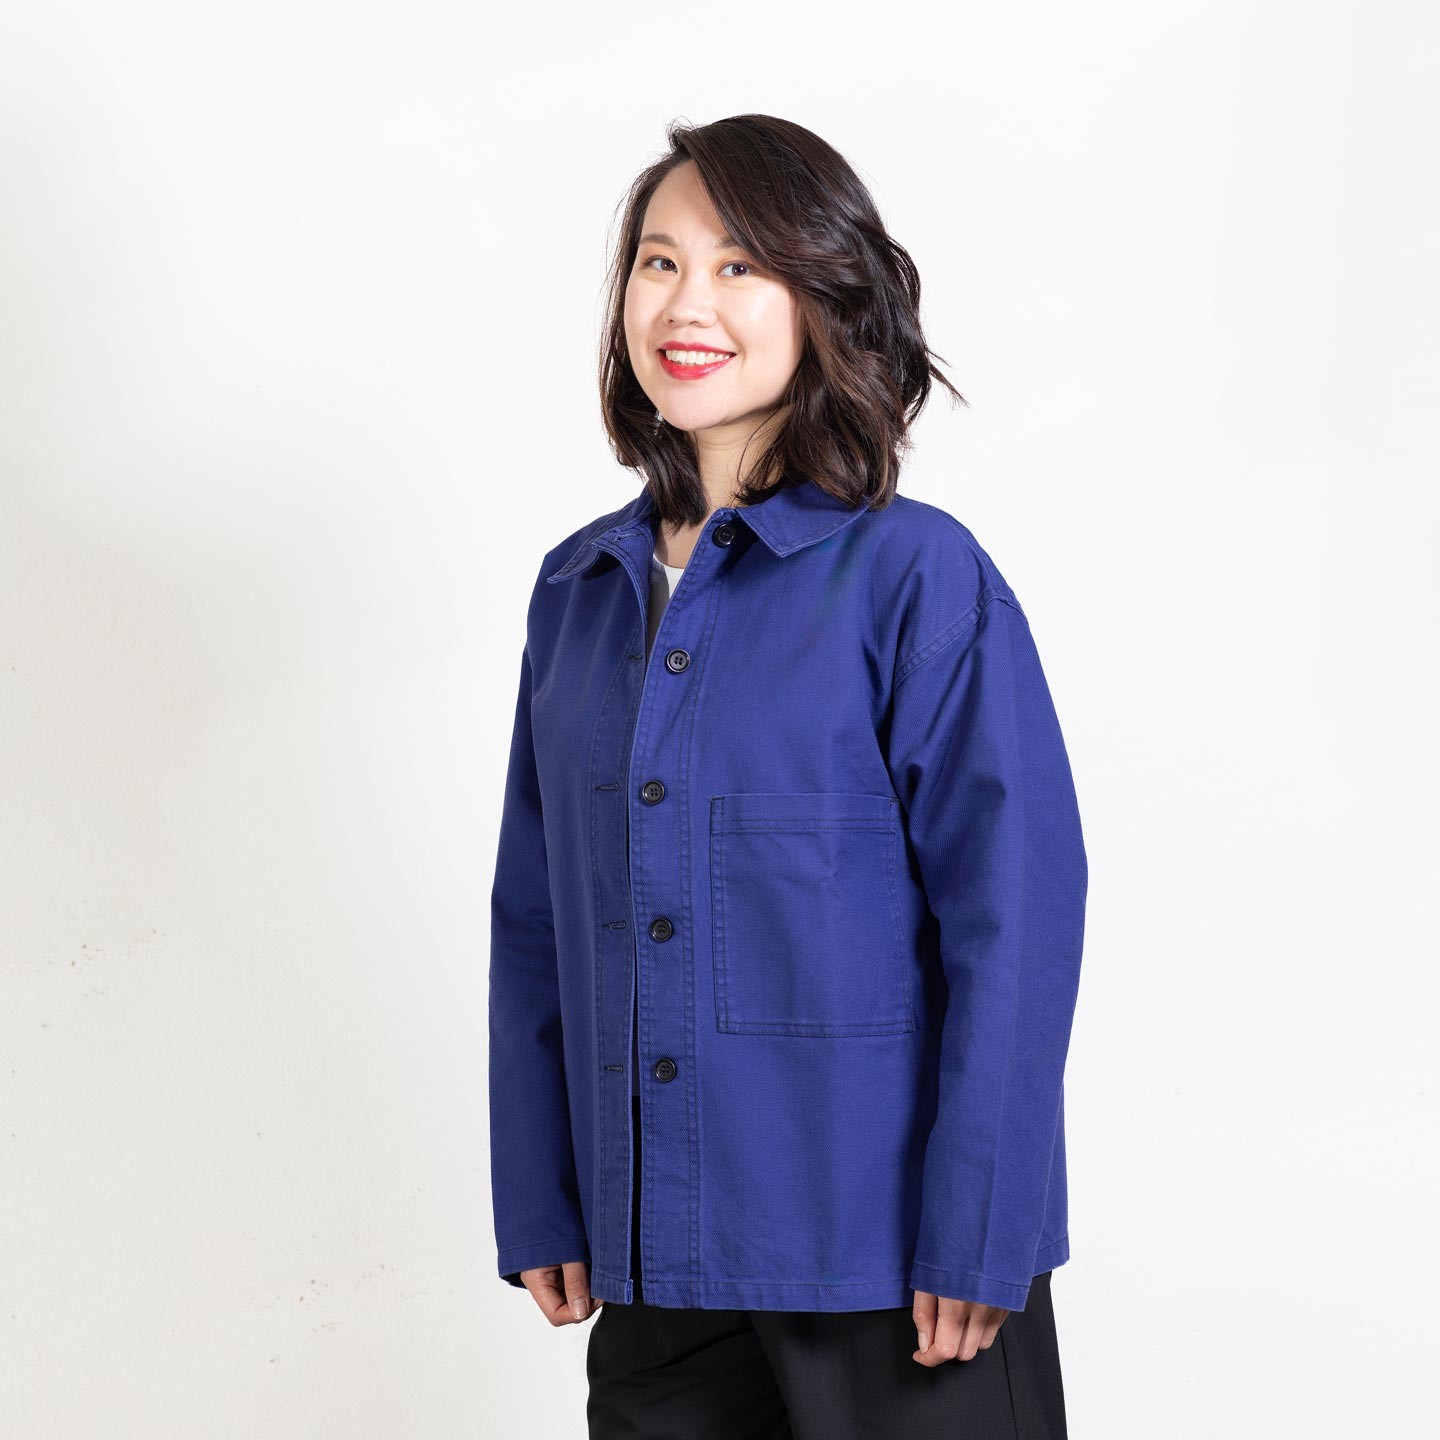 Drop-Shoulders Workwear Jacket in organic cotton 1G/6K